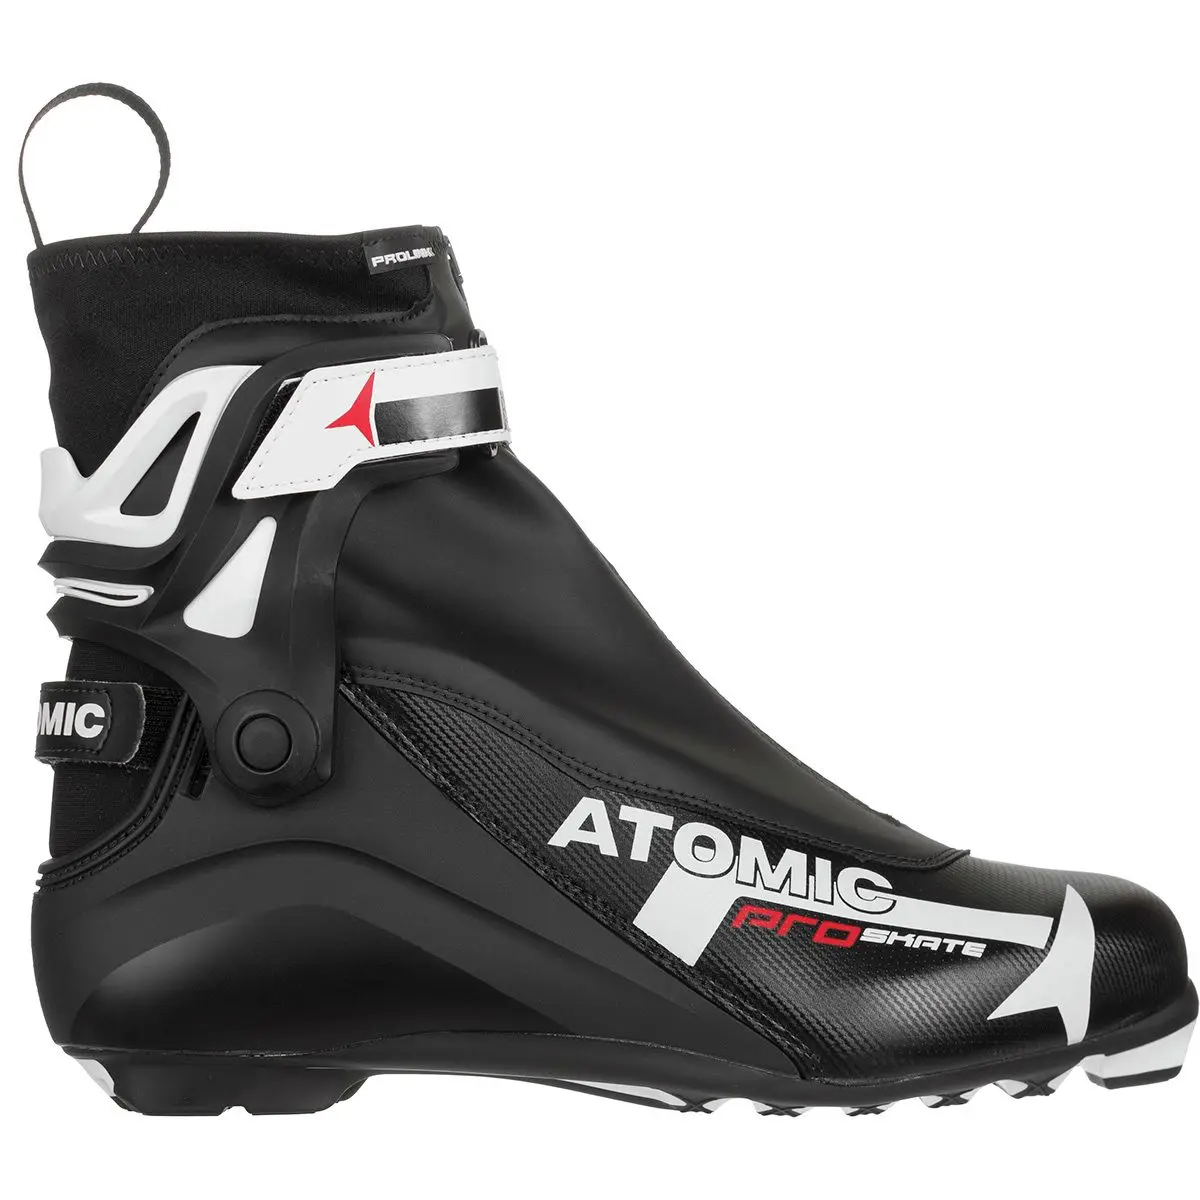 Atomic pro skate. Лыжные ботинки Атомик. Лыжные ботинки Atomic Pro Skate Prolink. Ботинки лыжные Atomic WC Skate Prolink. Ботинки лыжные Atomic Race Skate.